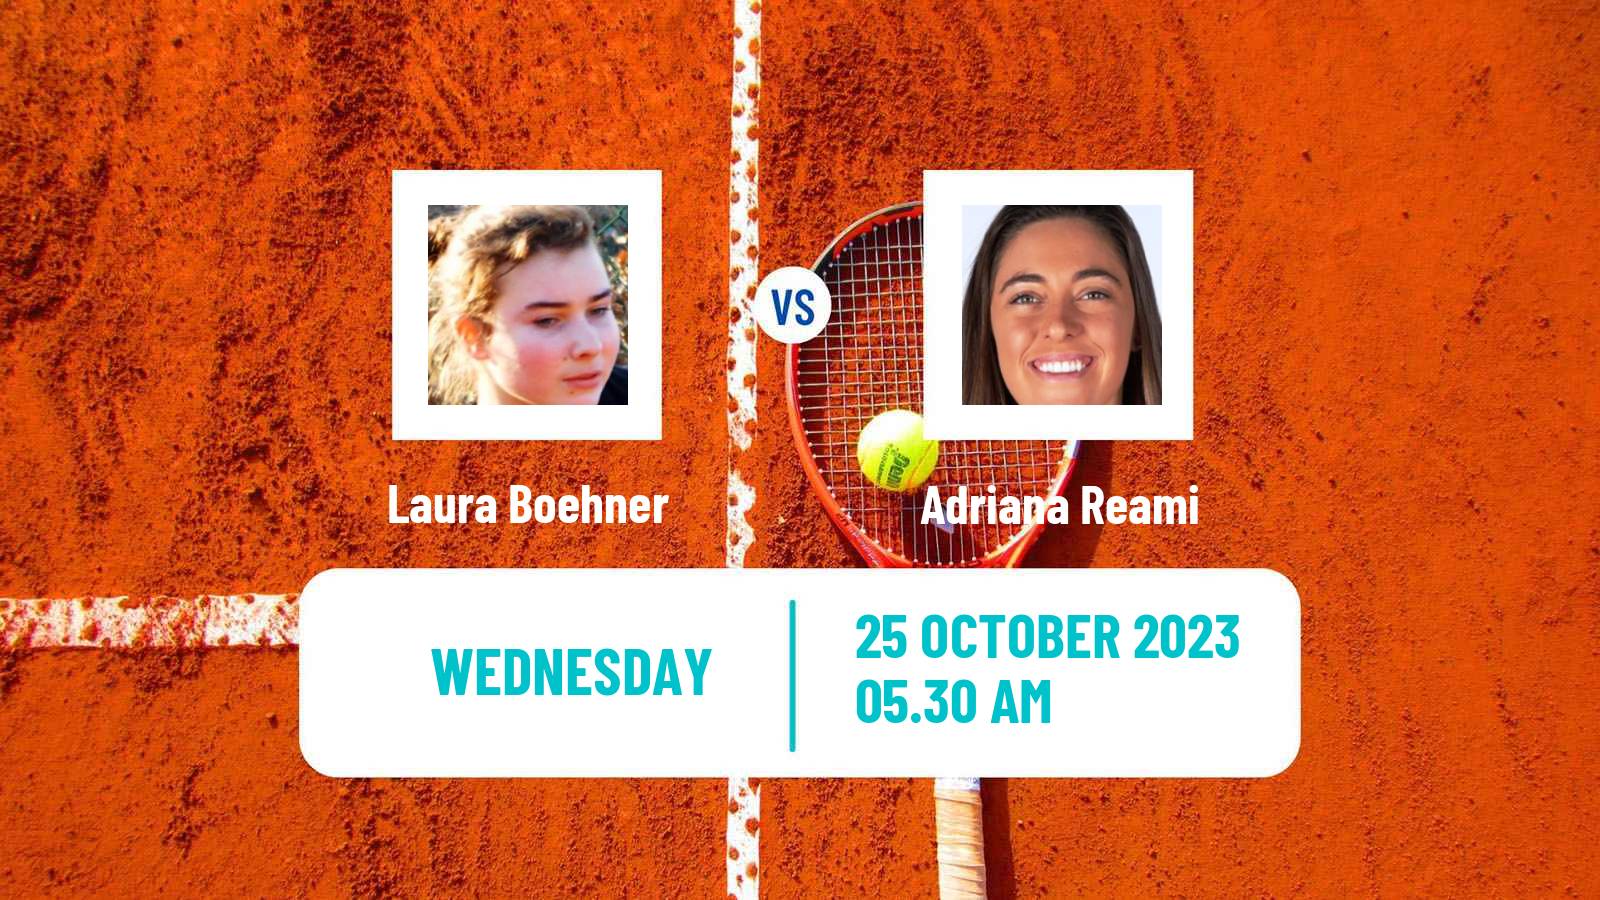 Tennis ITF W15 Villena Women Laura Boehner - Adriana Reami